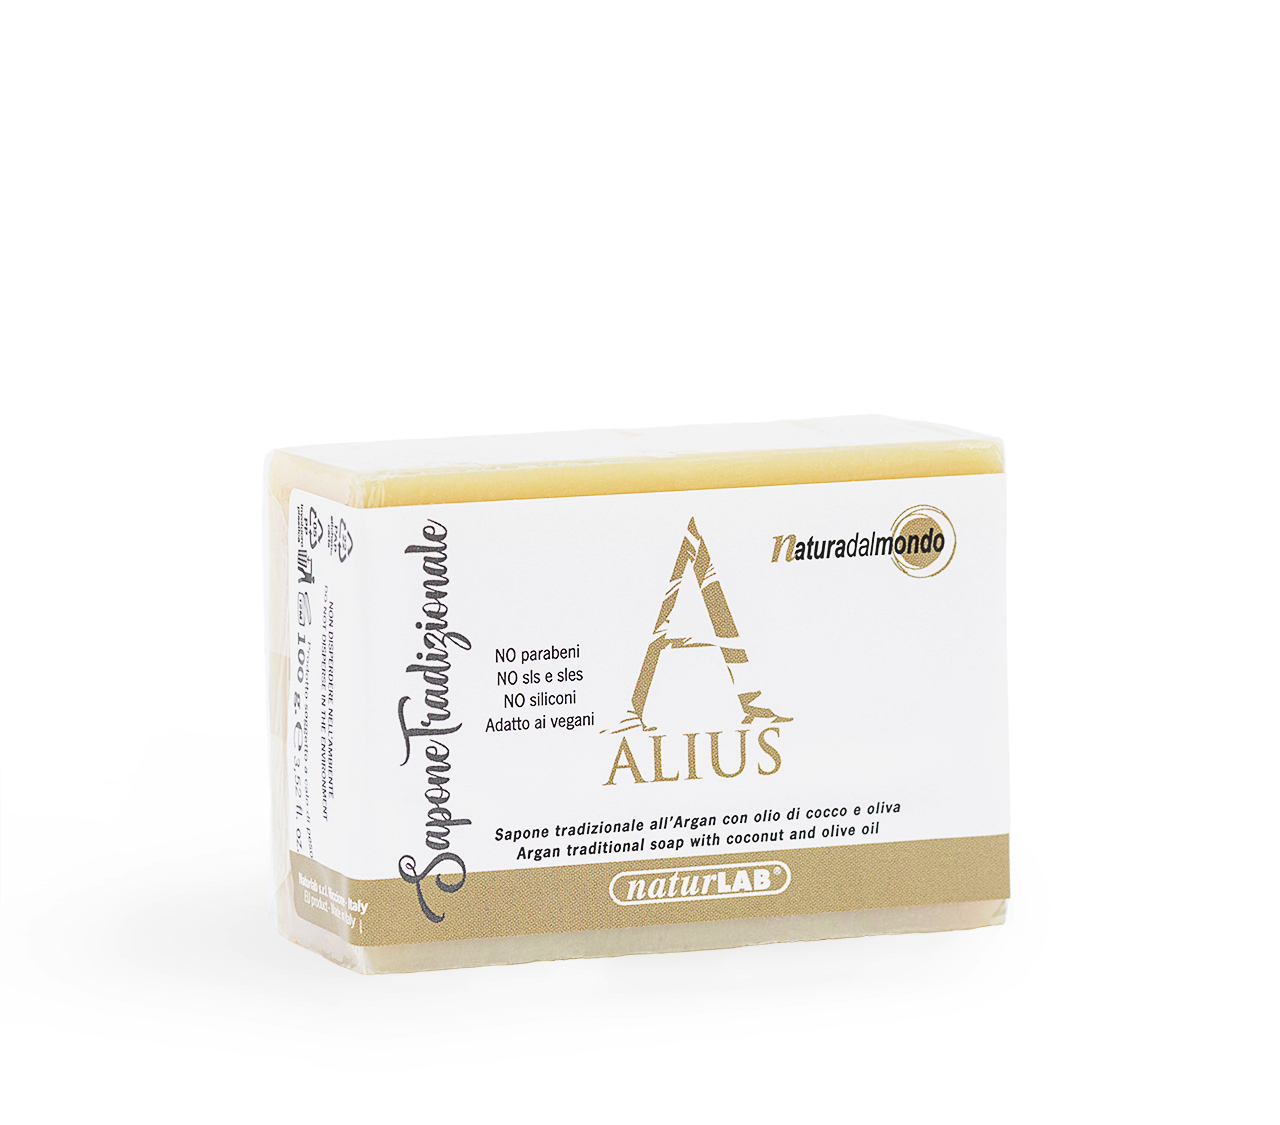 Solidissimi - Argan Traditional soap 100g.